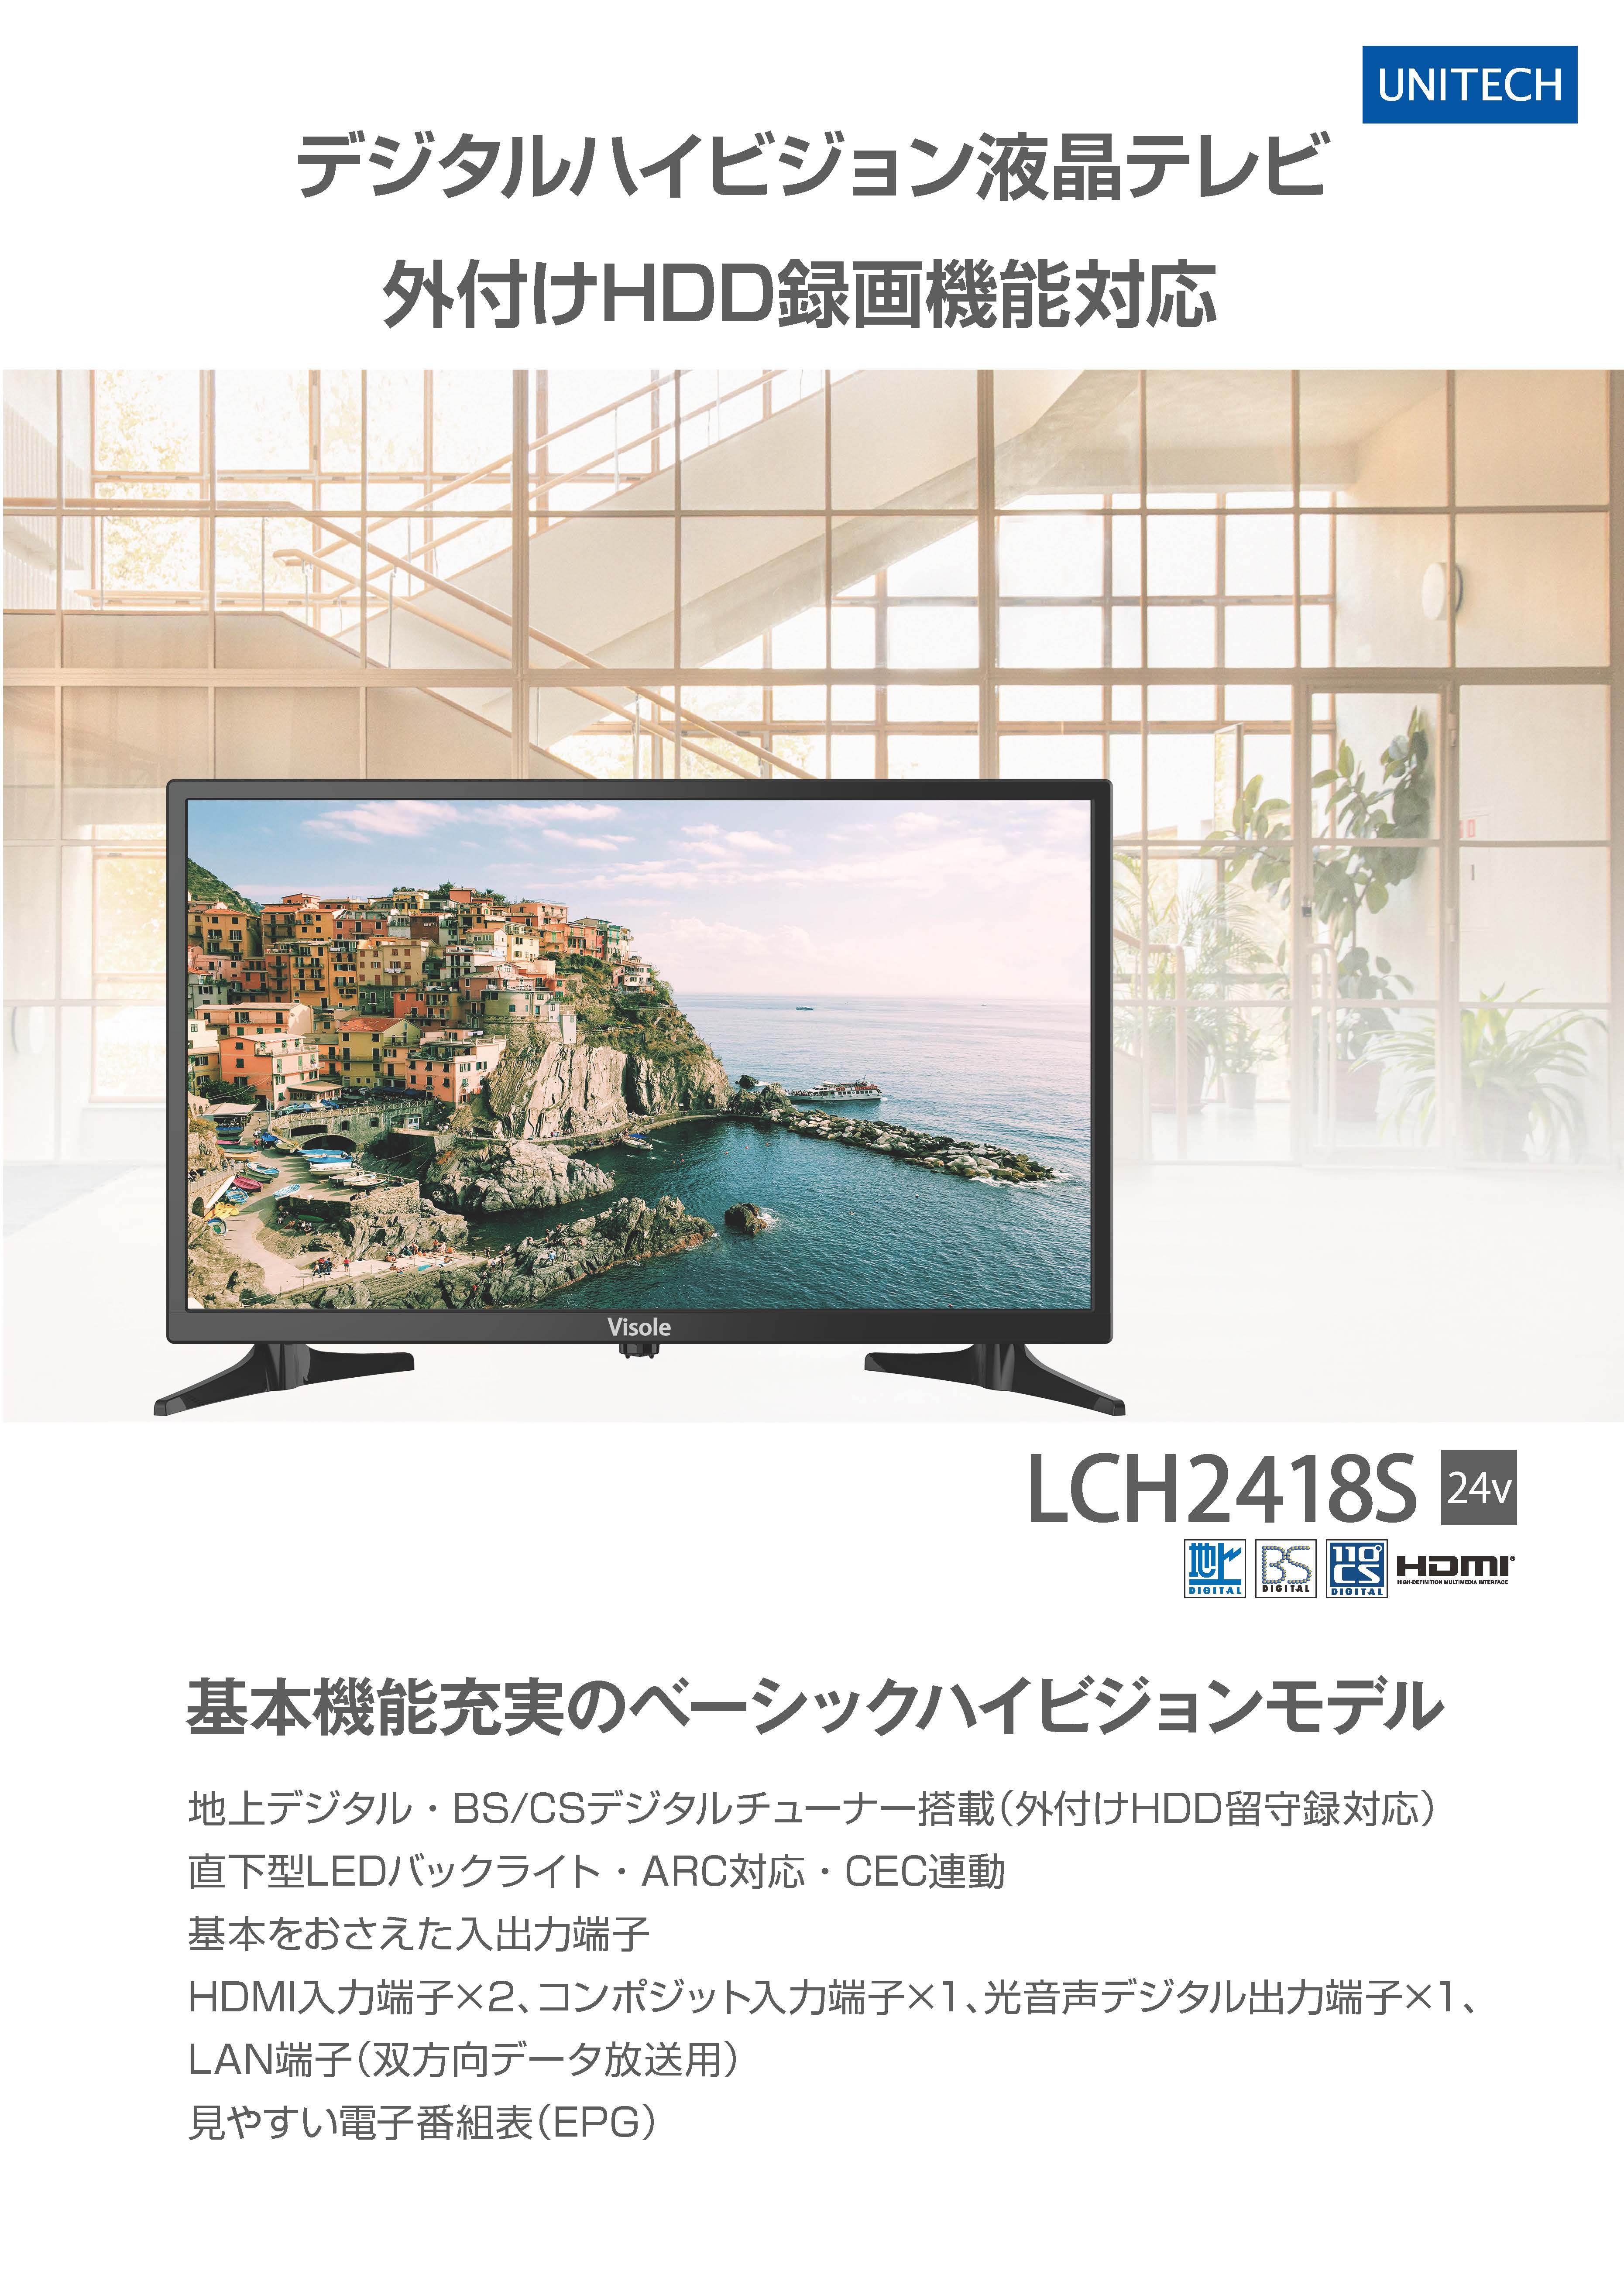 LCH2418S(液晶テレビ)の販売を開始しました。 | 株式会社ユニテク